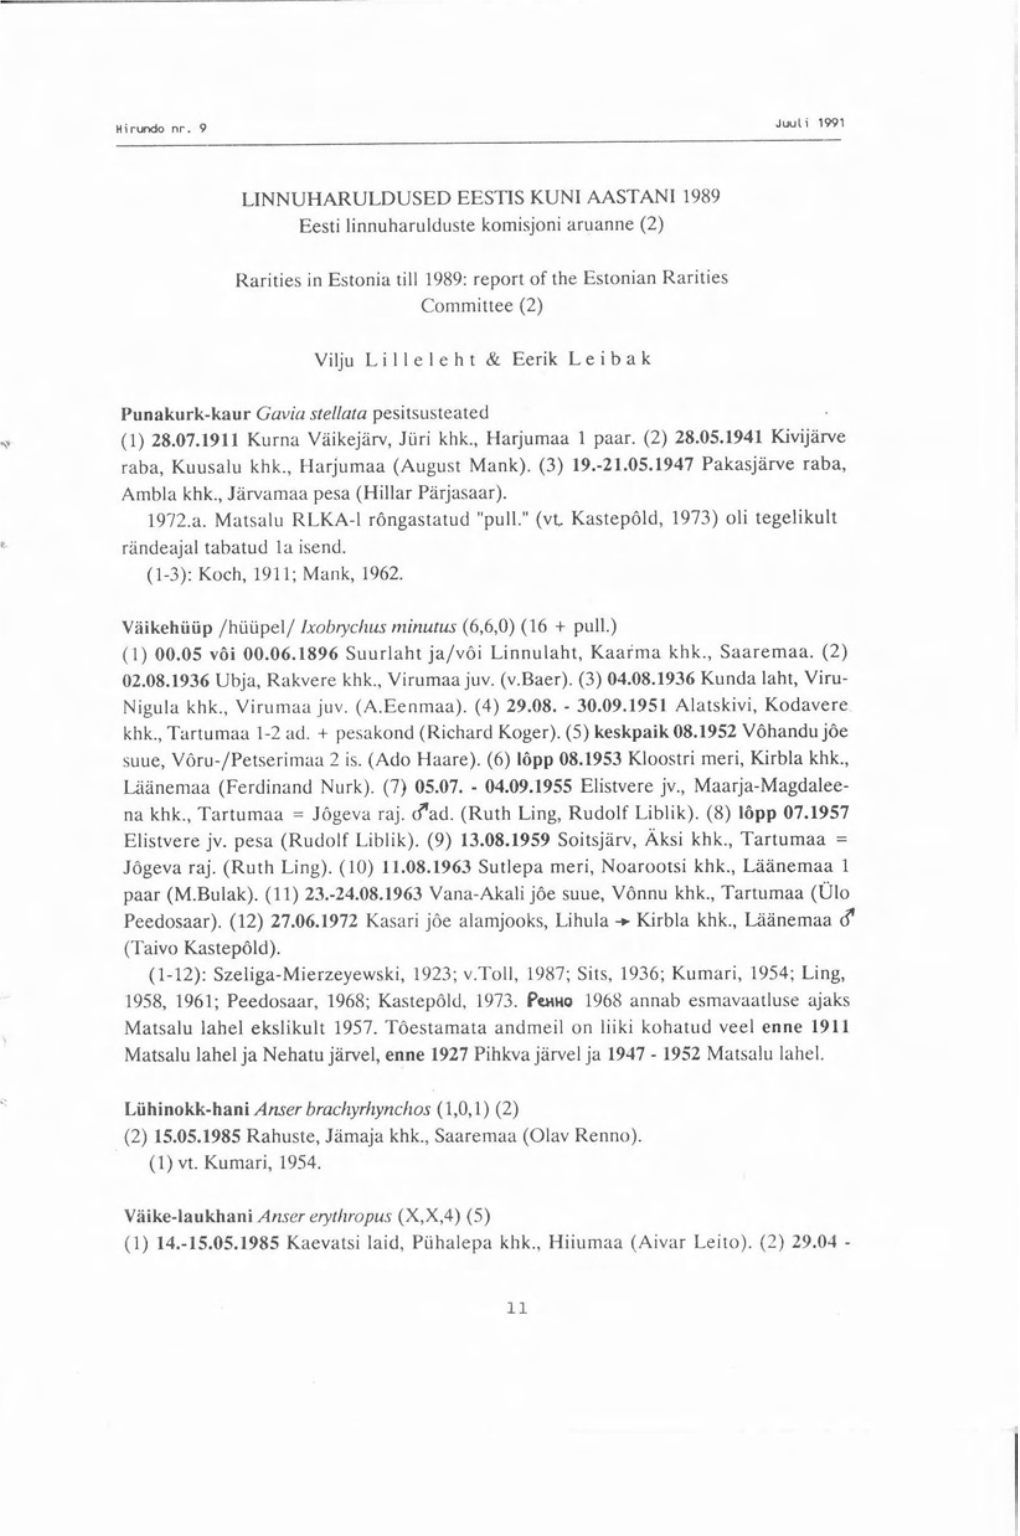 Rarities in Estonia Till 1989: Report of the Estonian Rarities Committee (2)